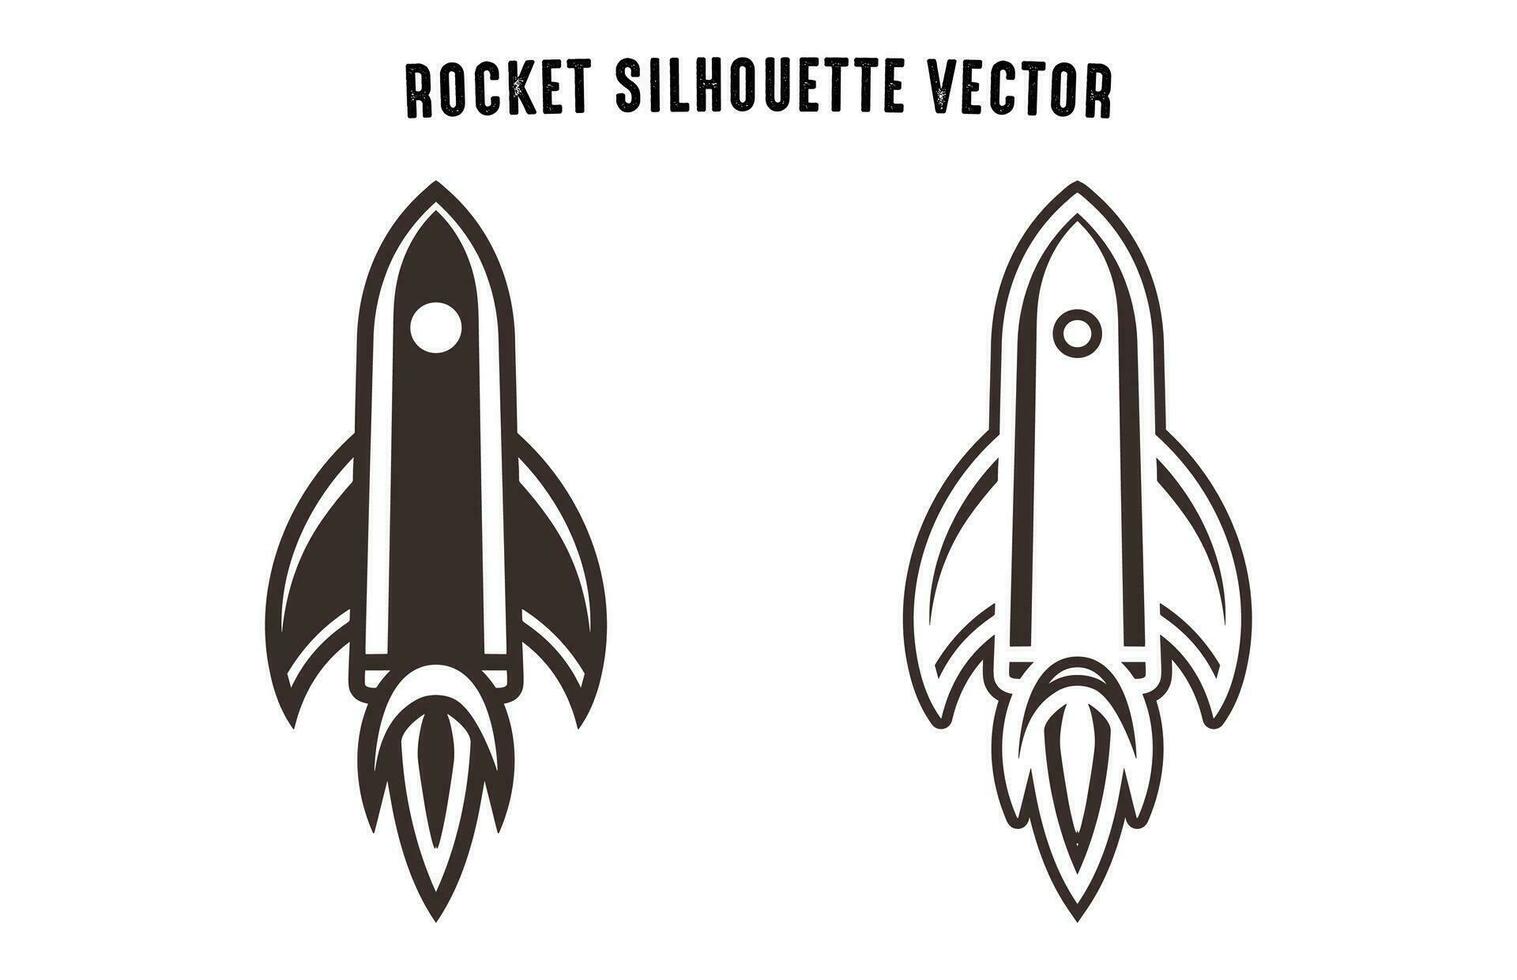 Rakete Raumschiff Silhouette Vektor bündeln, Rakete Schiff Silhouetten Vektor einstellen